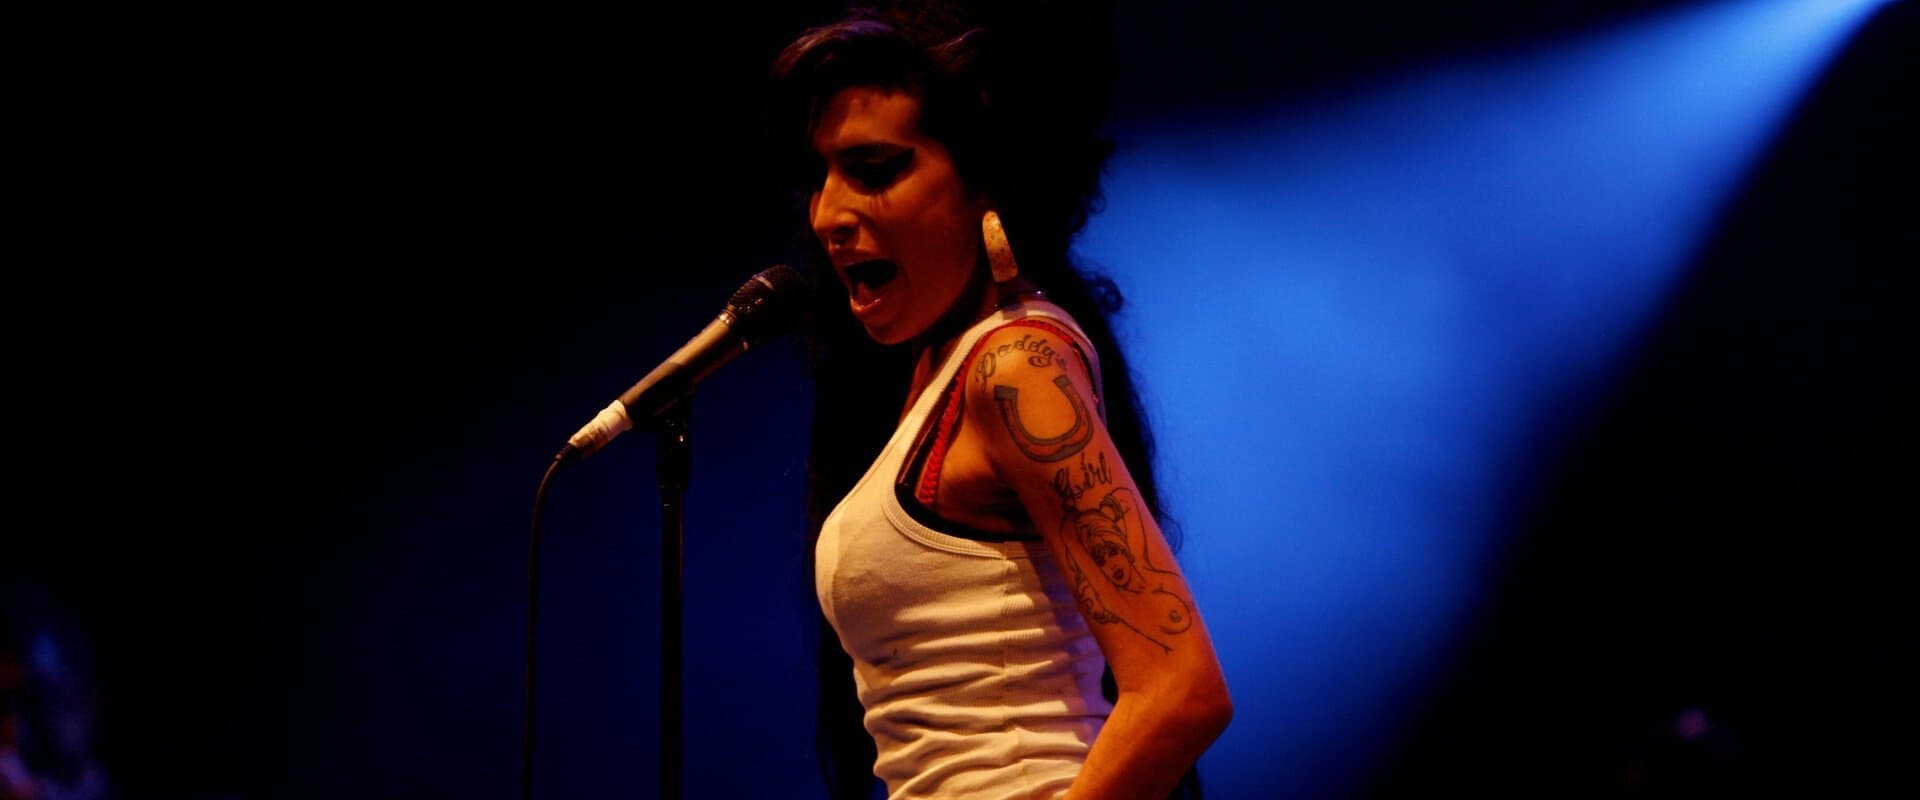 Amy Winehouse - Live at Les Eurockeennes de Belfort